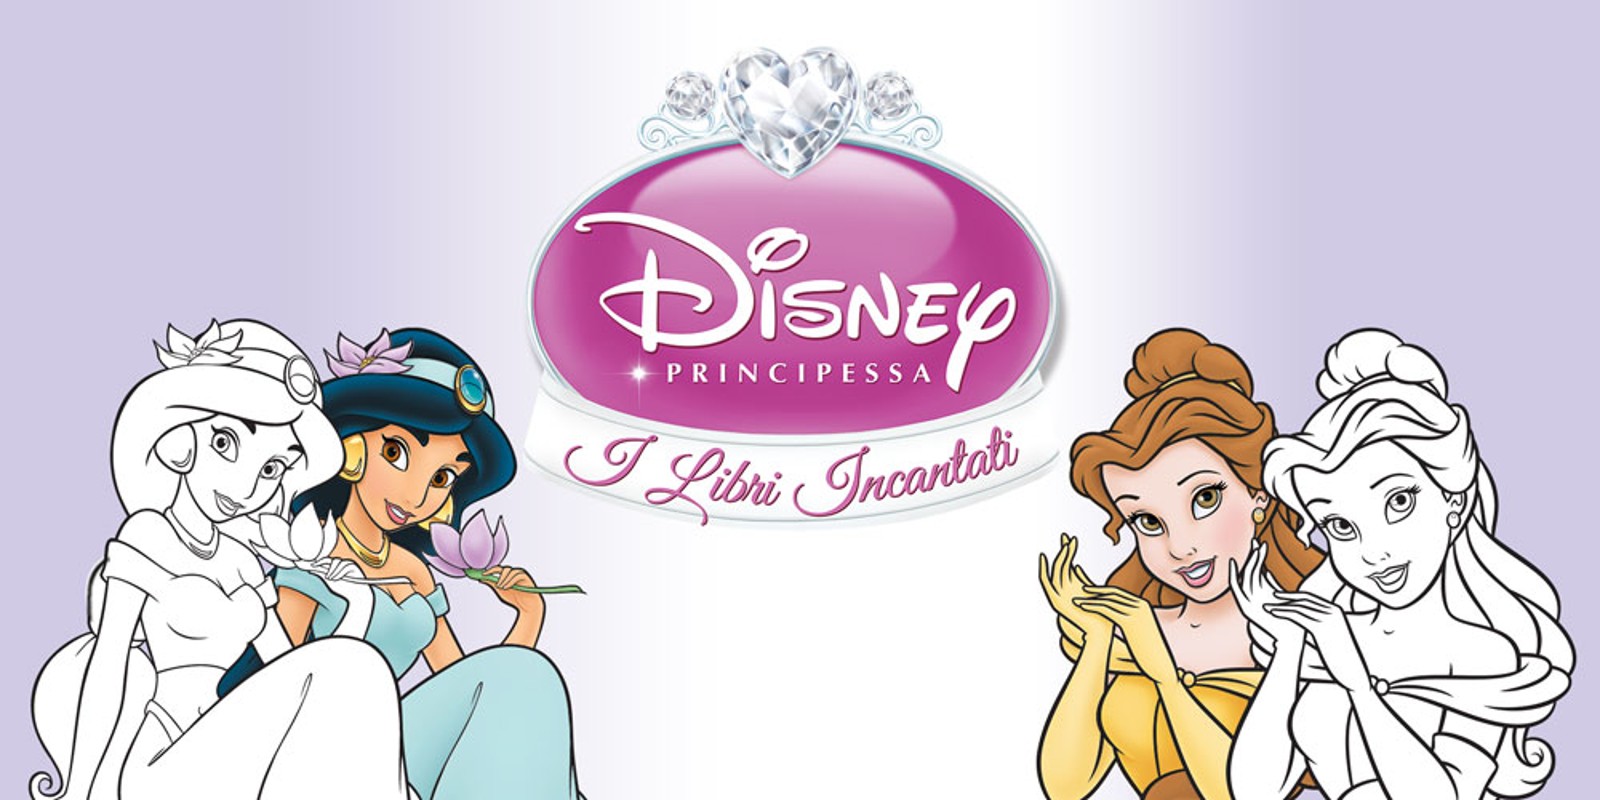 Disney Principessa: I Libri Incantati, Nintendo DS, Giochi